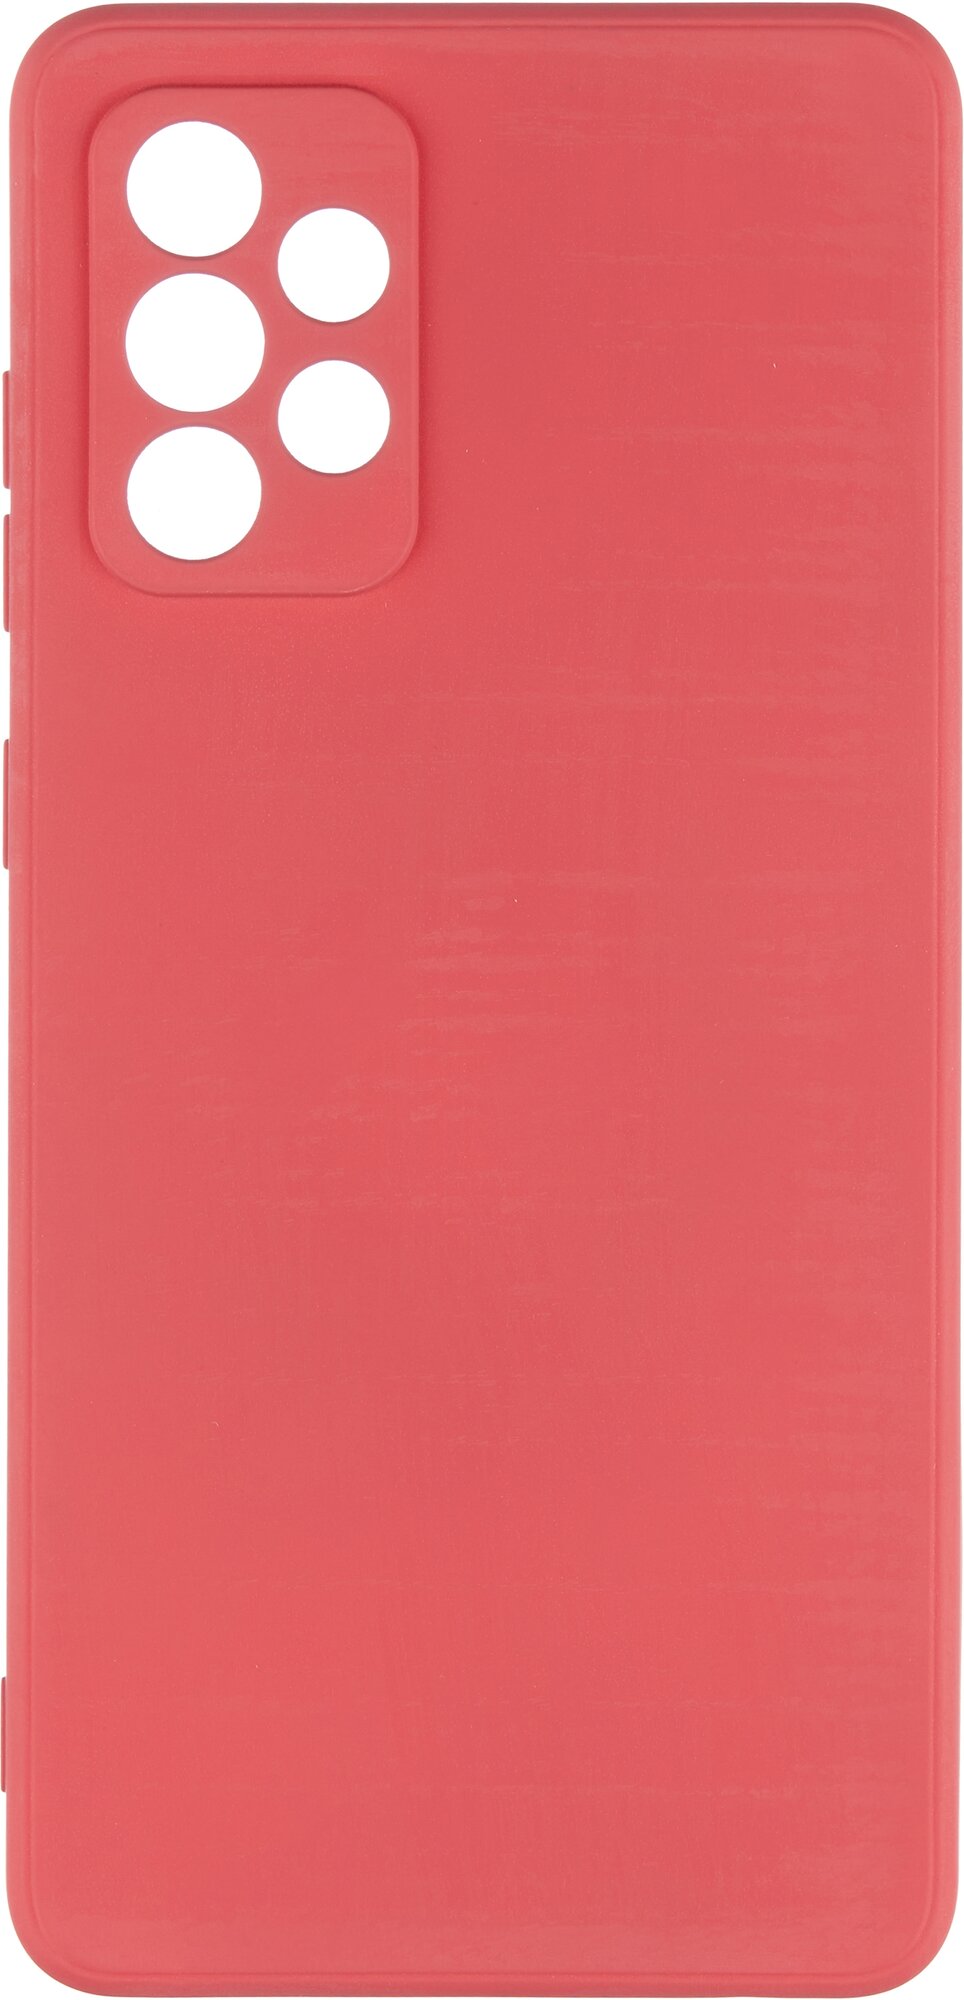 Чехол накладка G-Case Silicone для Samsung Galaxy A72 (Самсунг Гэлакси Галакси А72) SM-A725F, красная